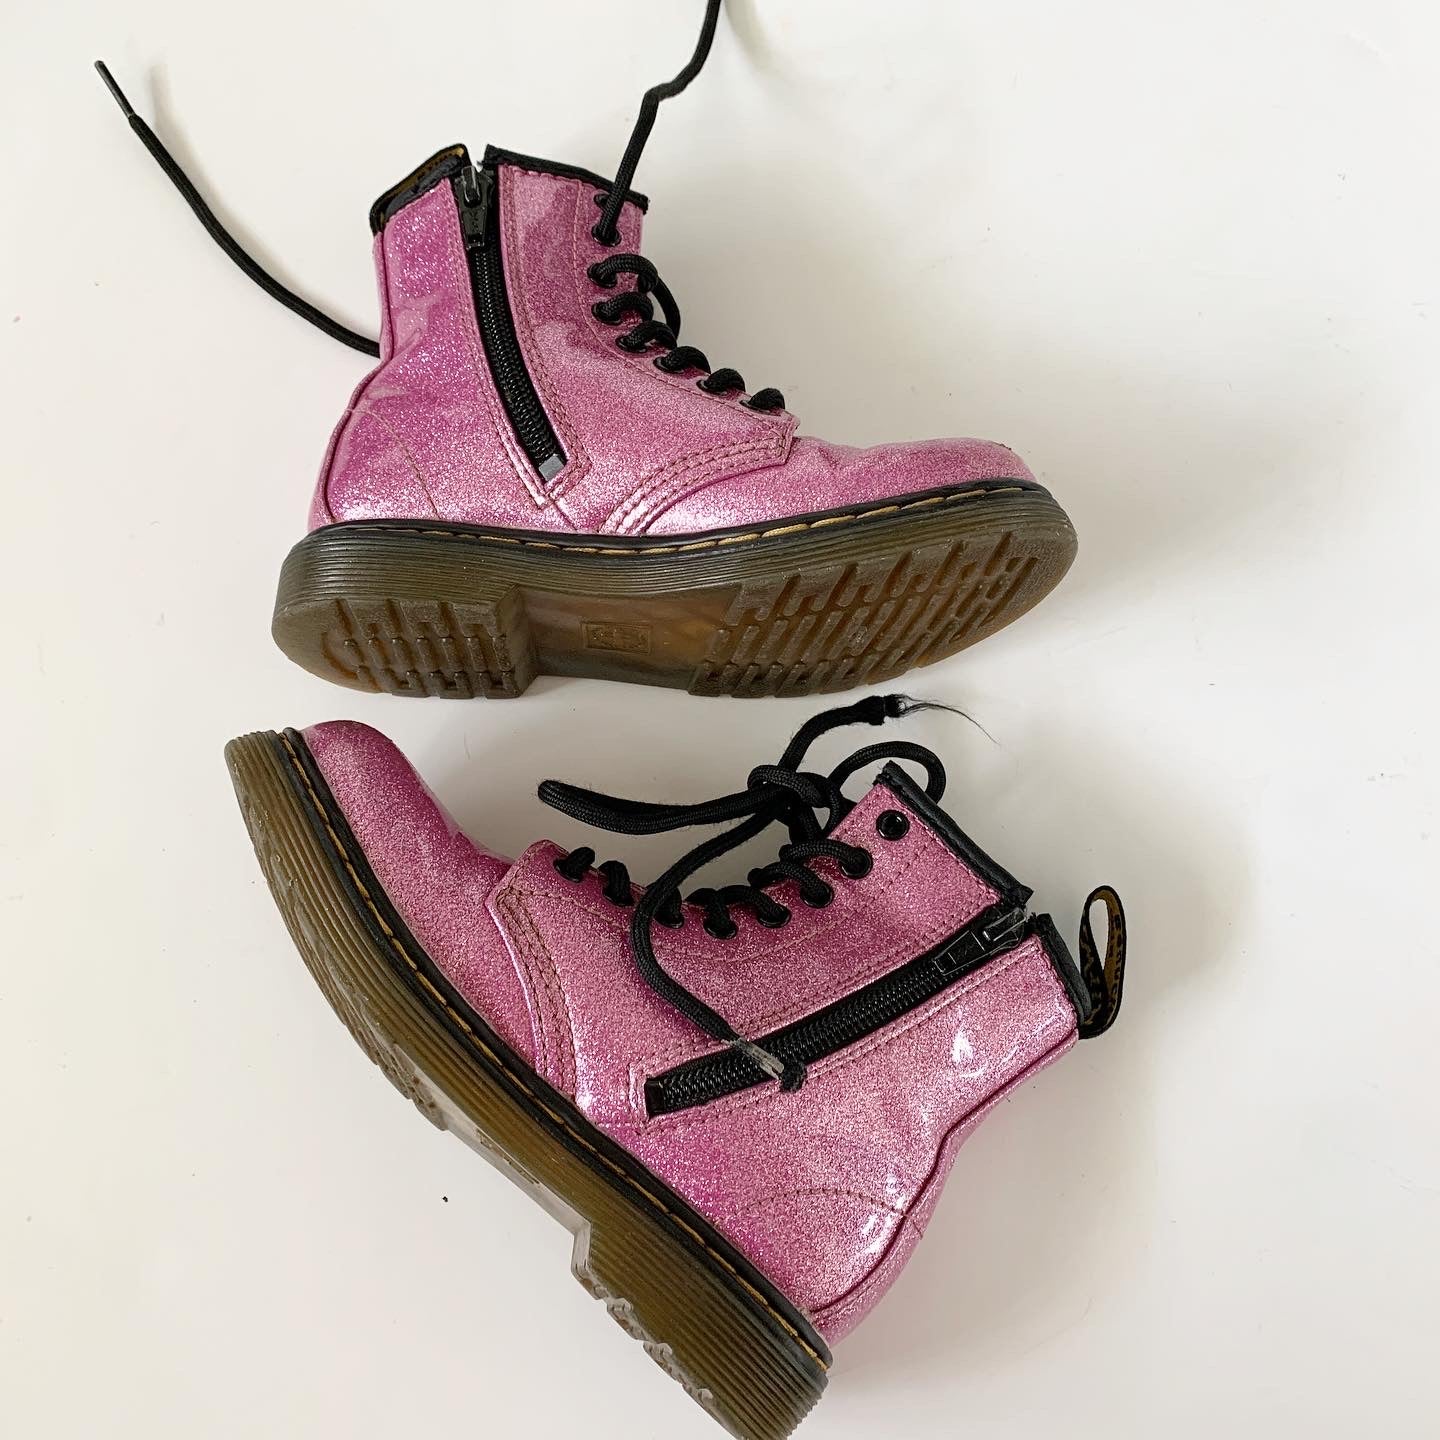 Dr. Doc Martens 1460 Glitter J Girl’s Pink Combat Boots Toddler